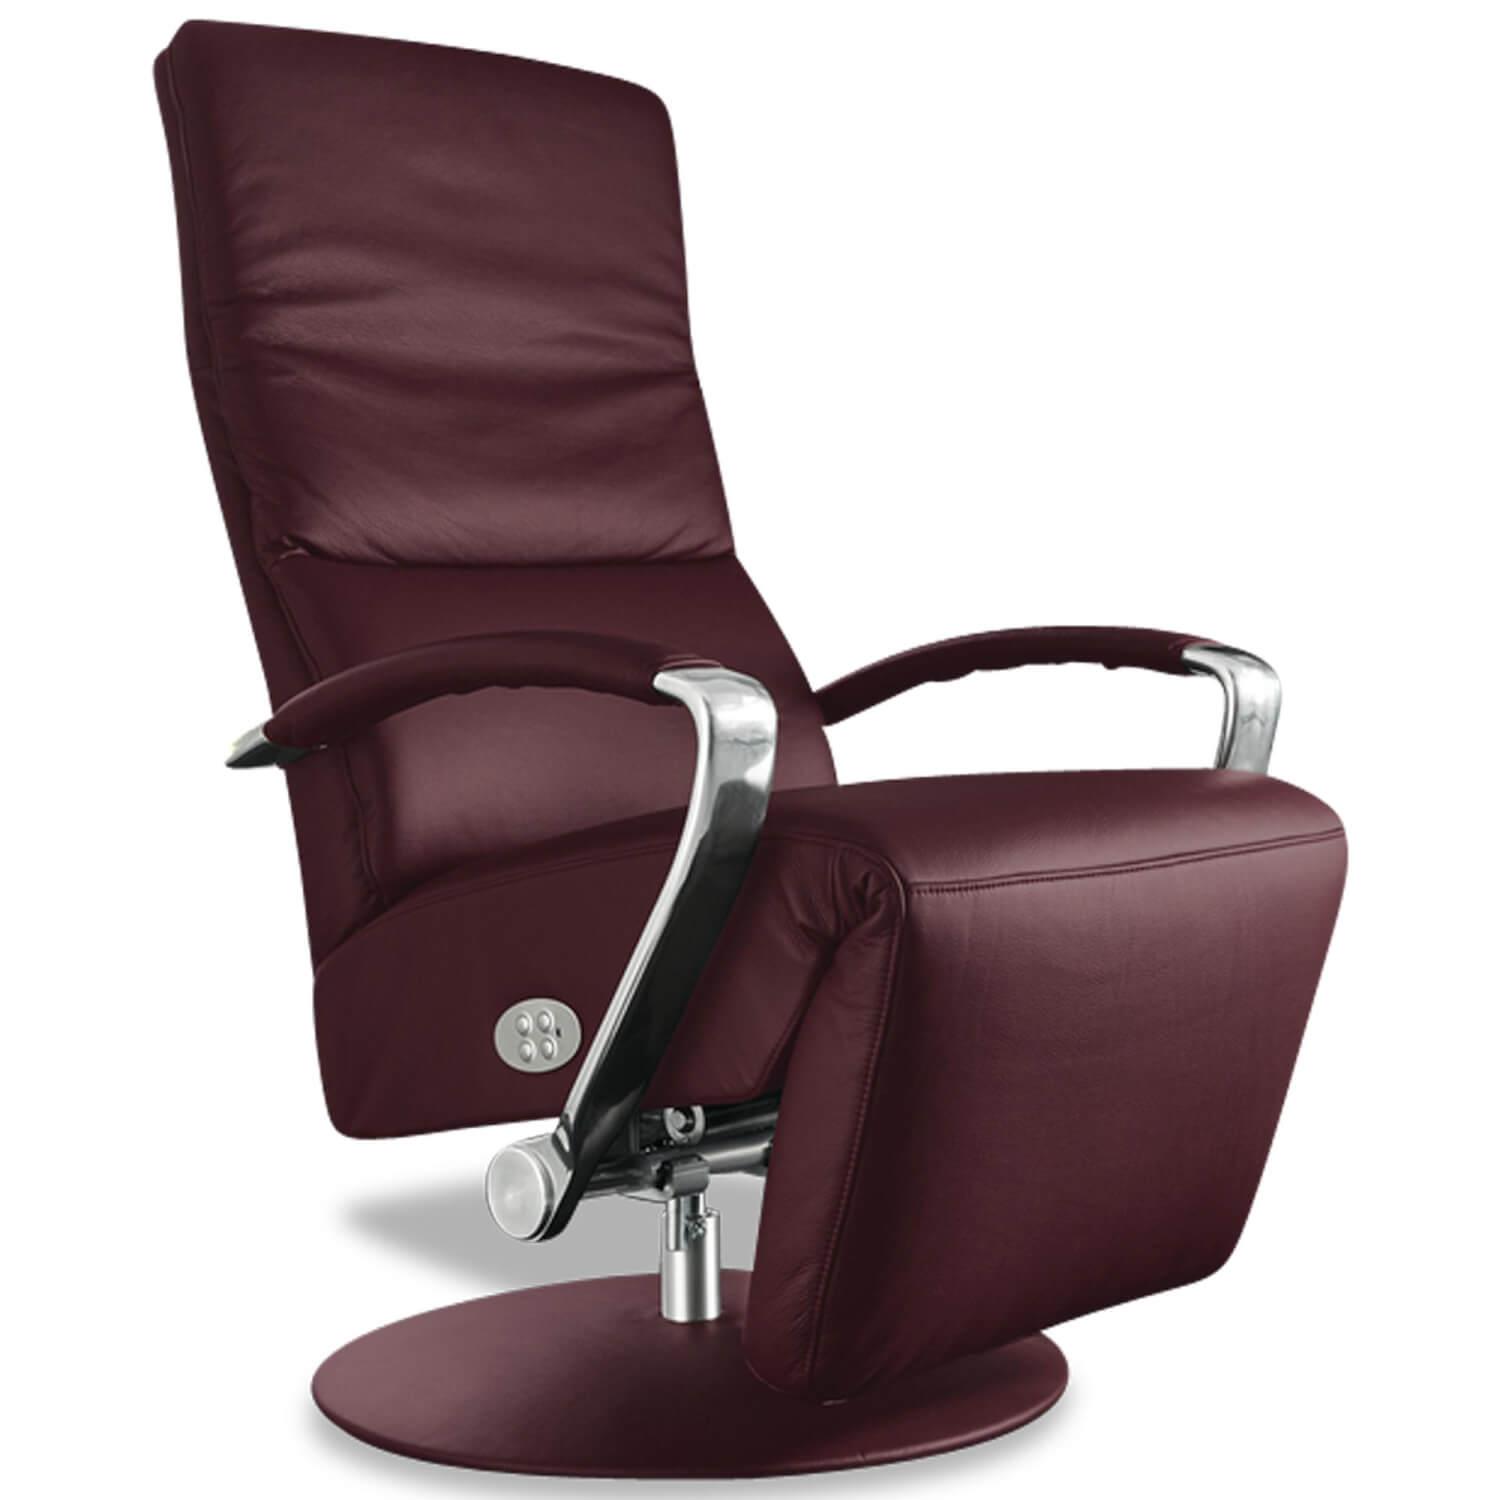 Relaxsessel Mr 4625 Leder Bordeaux Rot Mit Funktion Musterring Sessel Gunstig Kaufen Mobelfirst